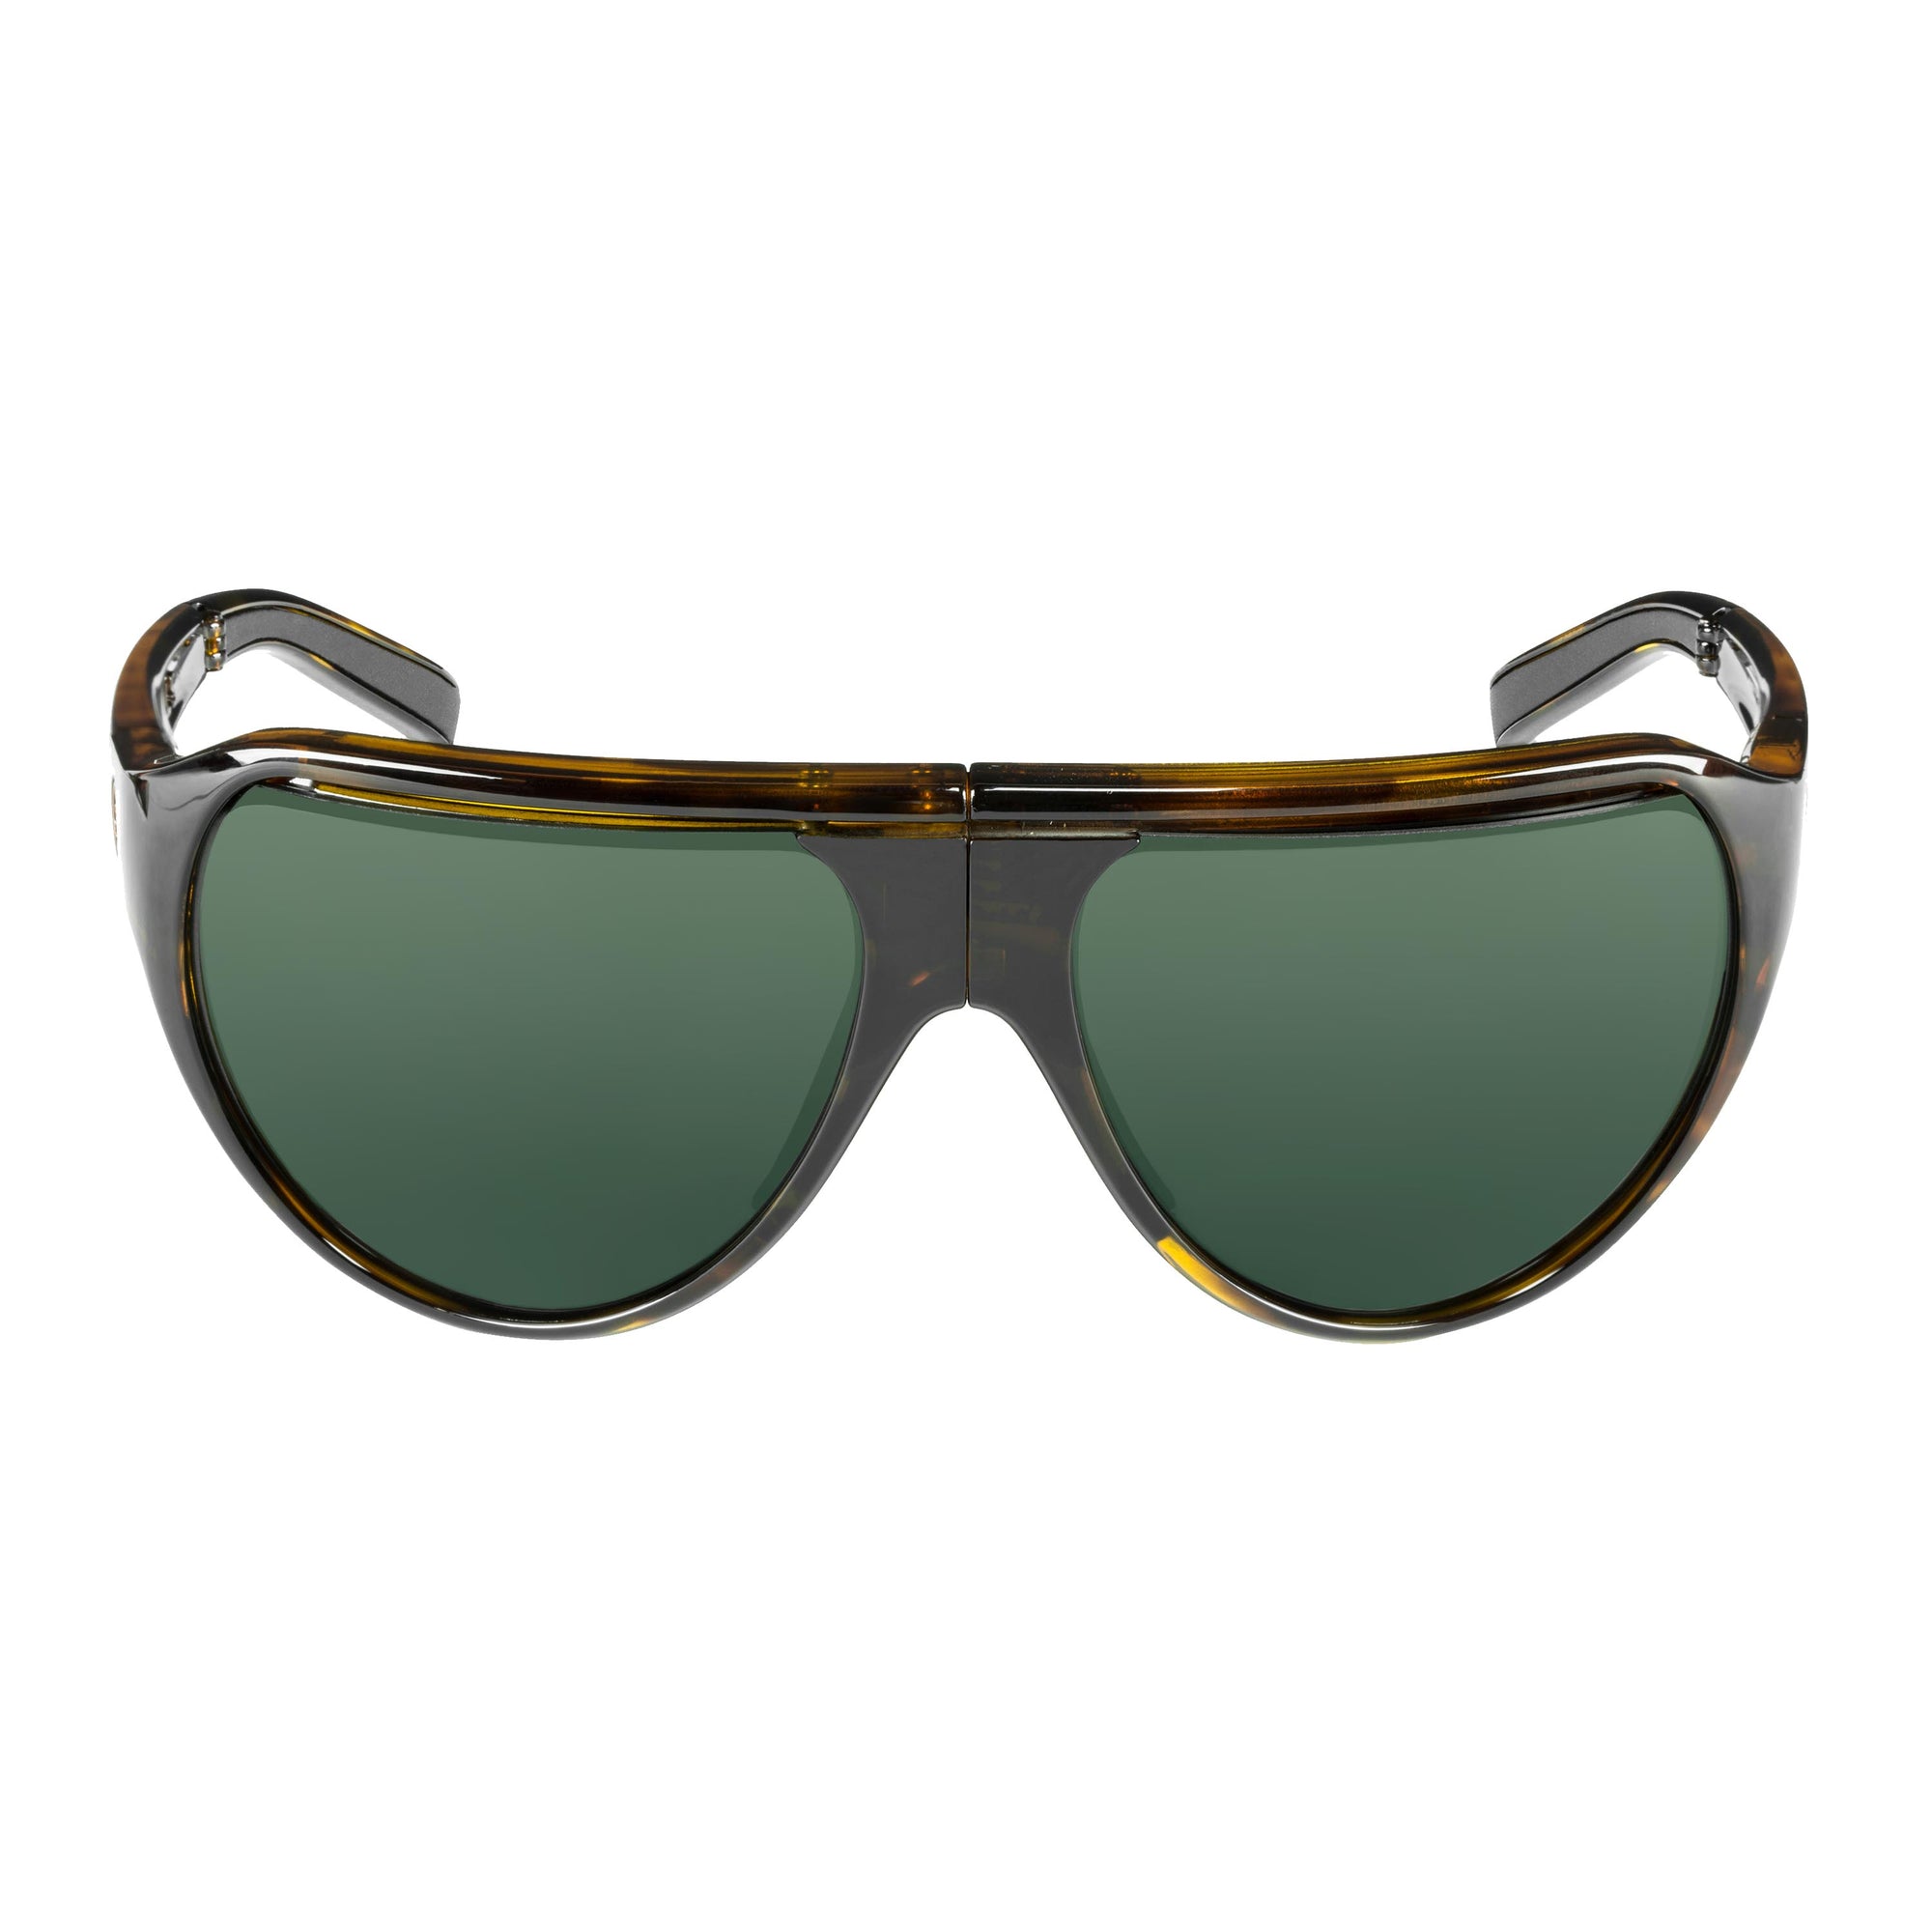 Popticals, Premium Compact Sunglasses, PopAir, 300010-CTEP, Polarized Sunglasses, Gloss Tortoise Frame, Green Lenses, Front Tilt View